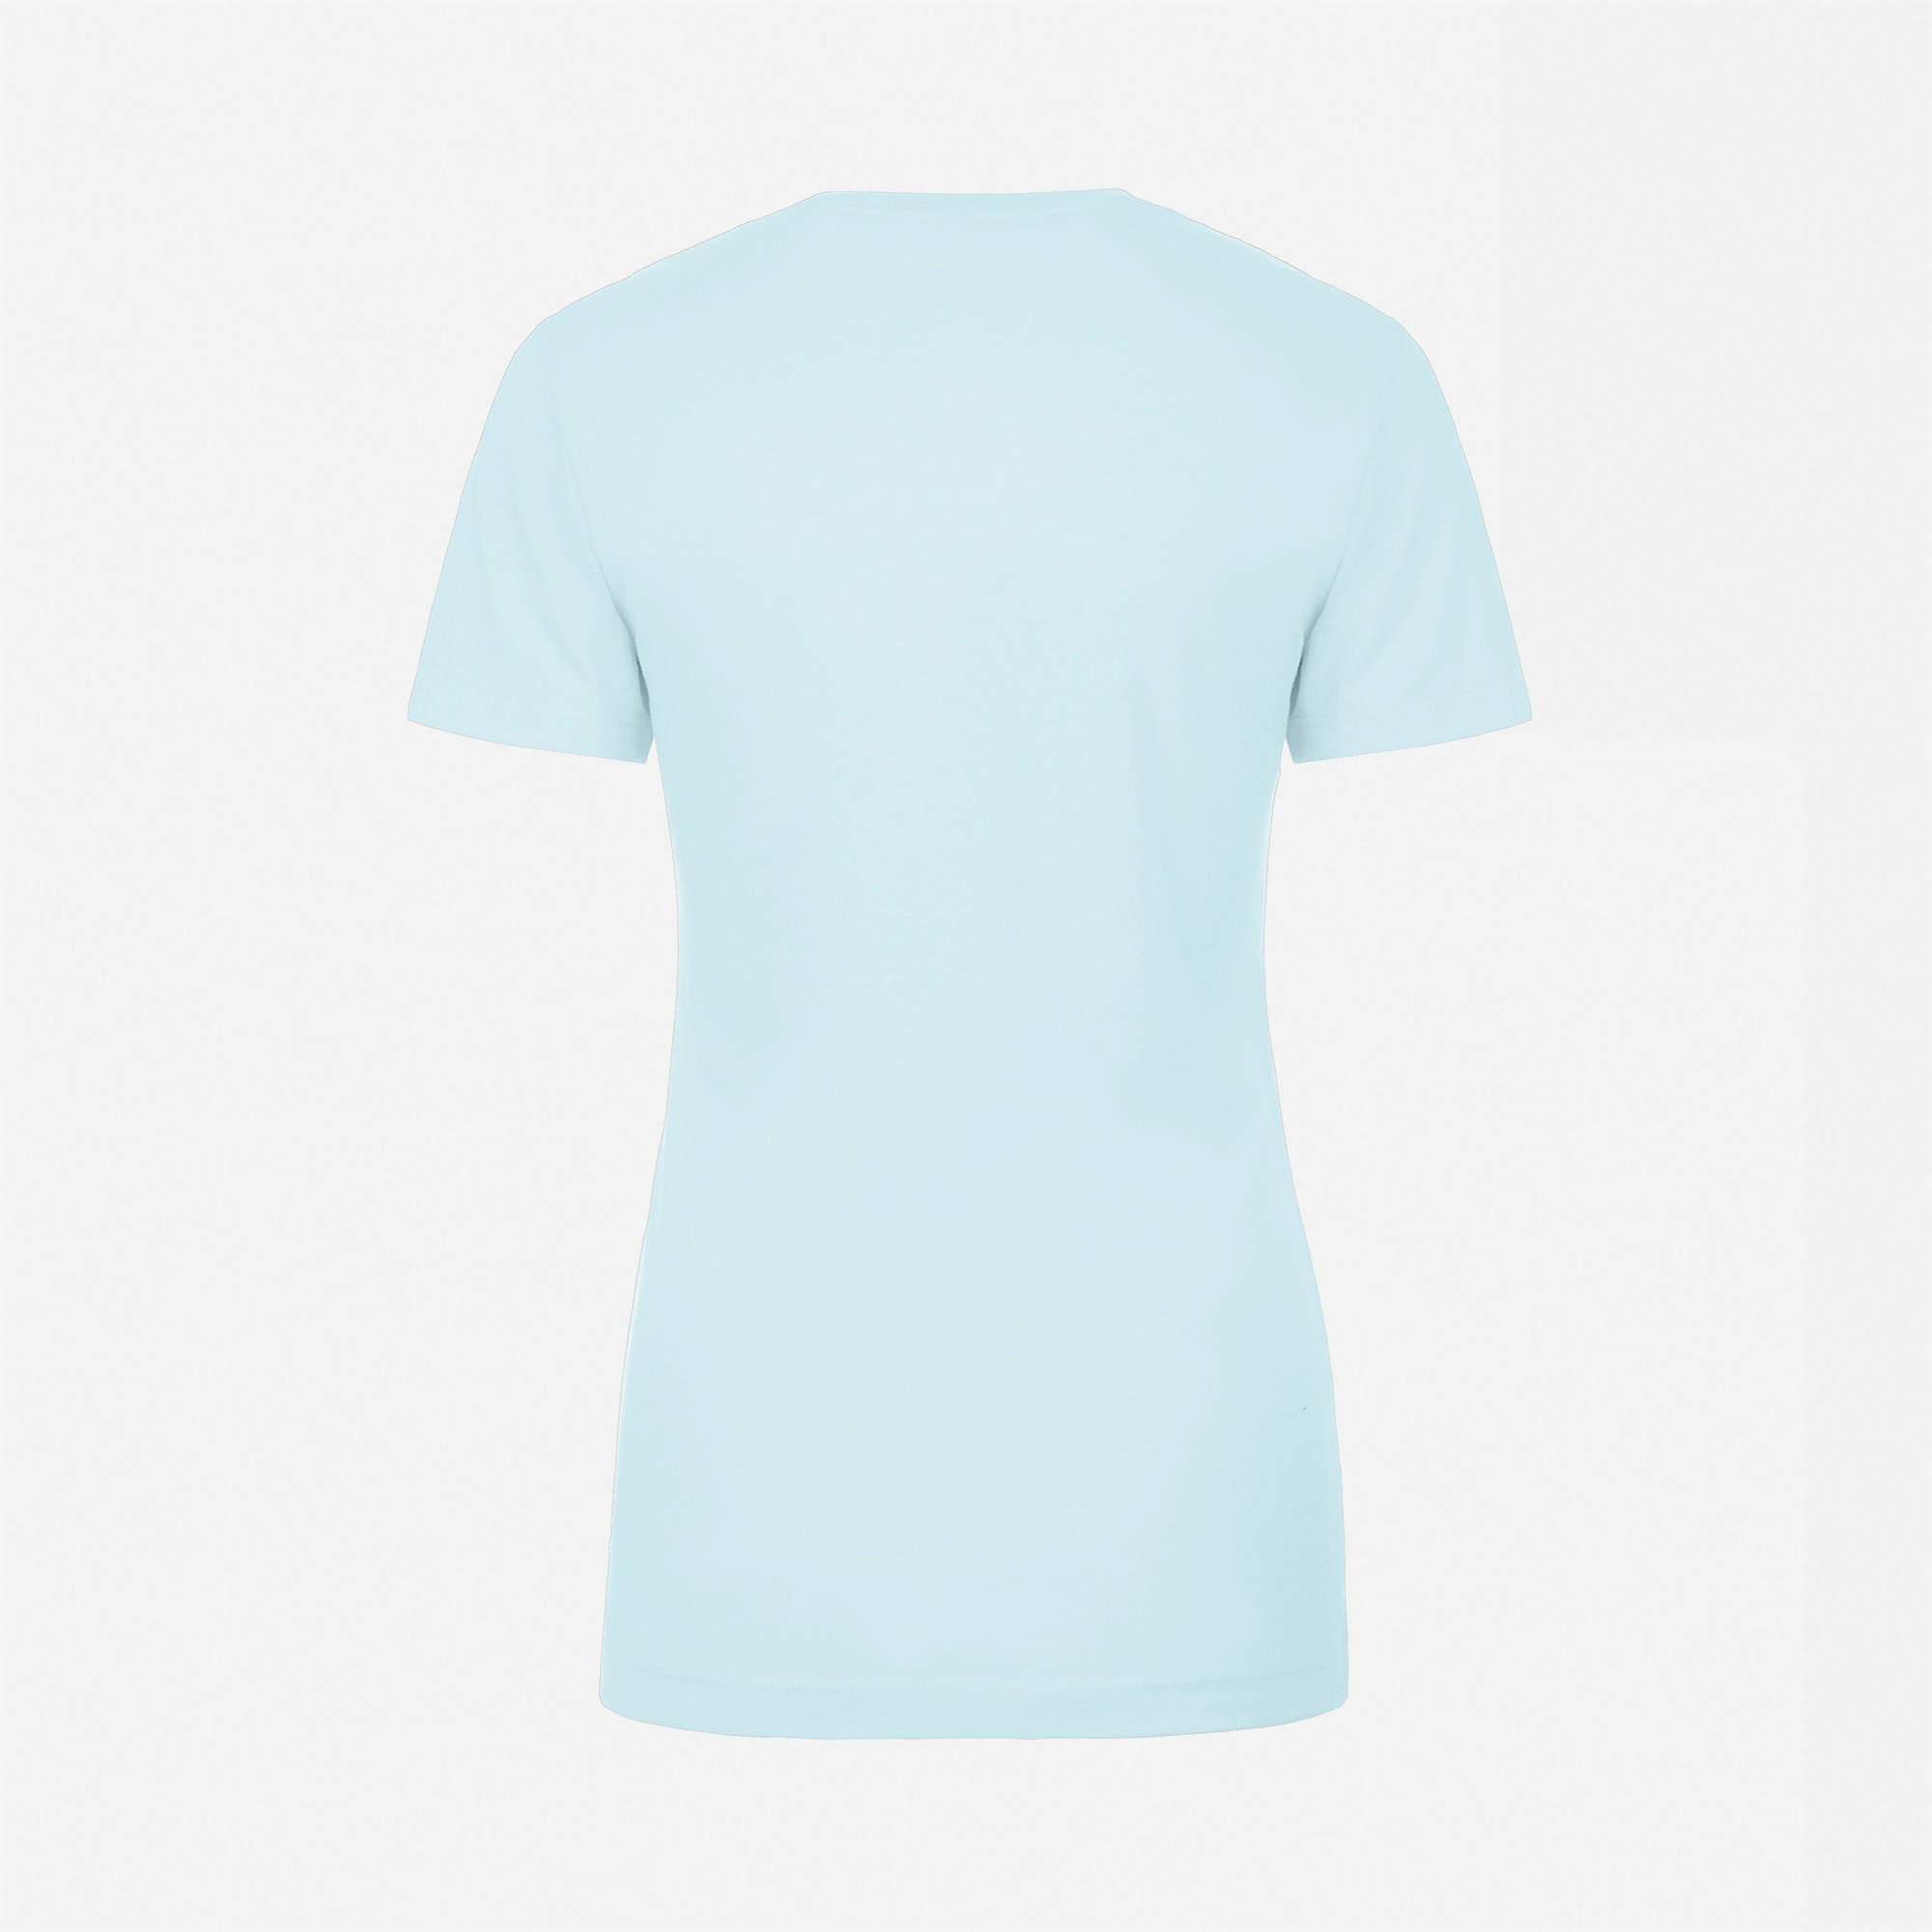 Cotton Boyfriend T-Shirt Light Blue 3900 Back View Next Level Apparel